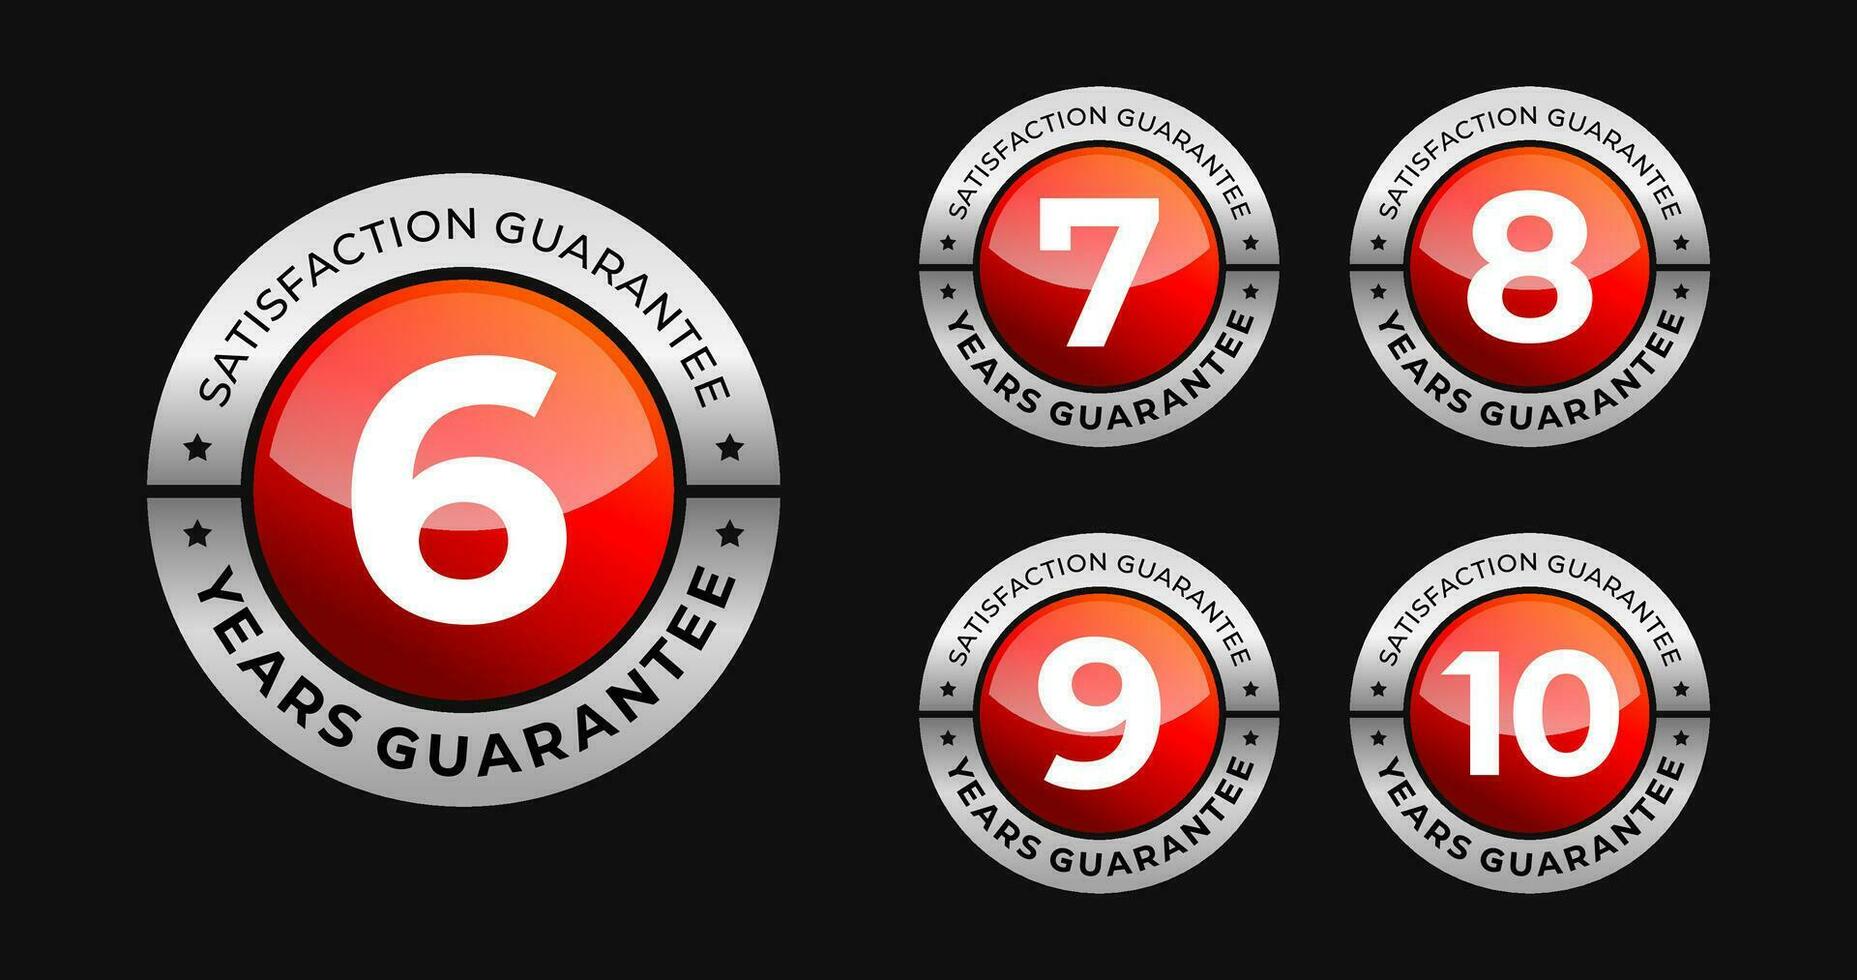 6, 7, 8, 9, 10 years warranty round button label icon set vector. Modern and minimalist design. EPS 10 vector